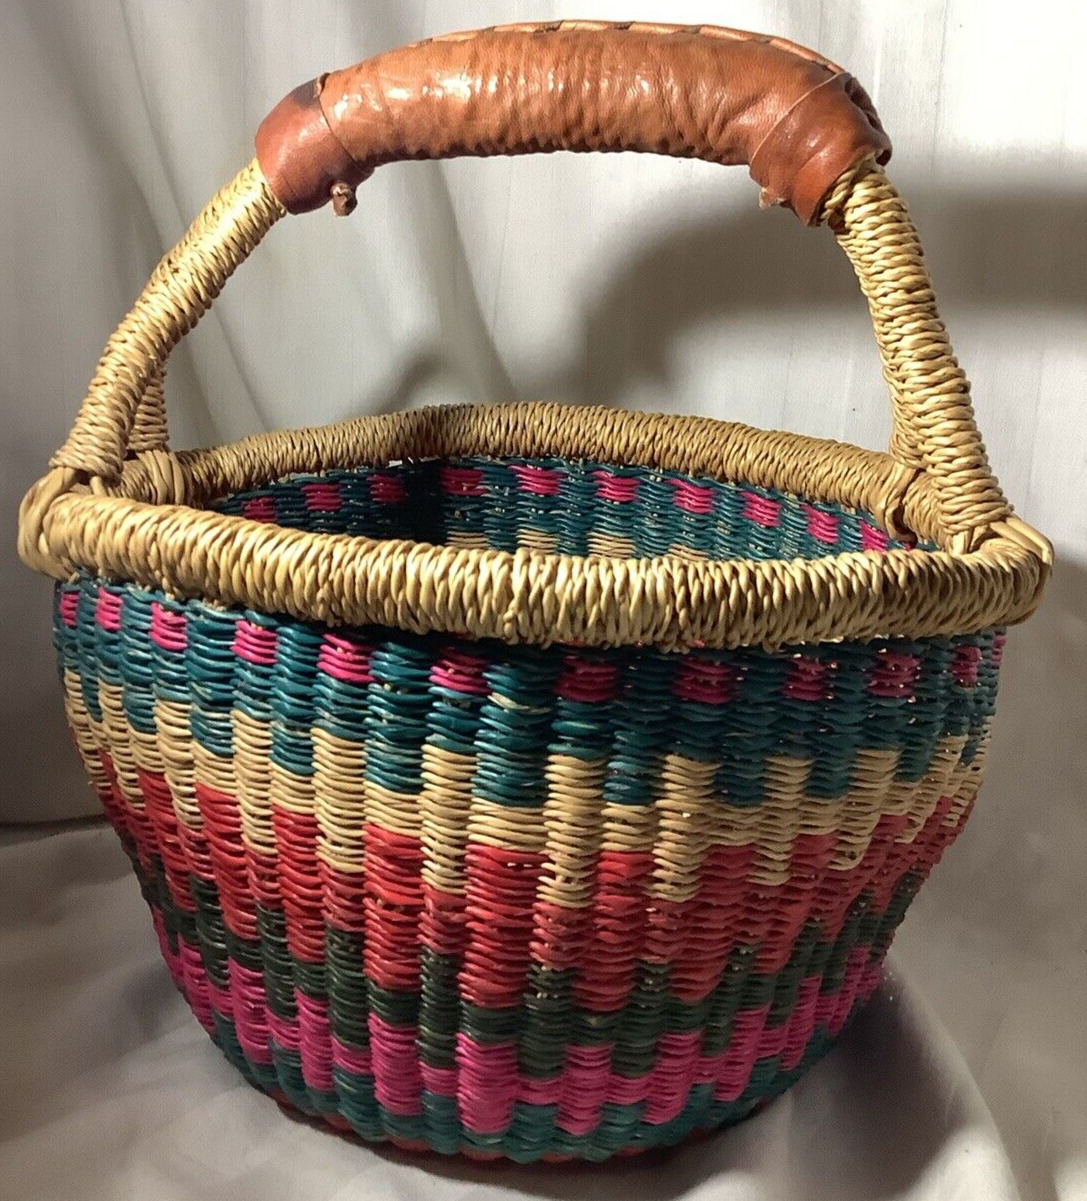 Bolga Colorful Woven Market Basket with Leather Handle NICE